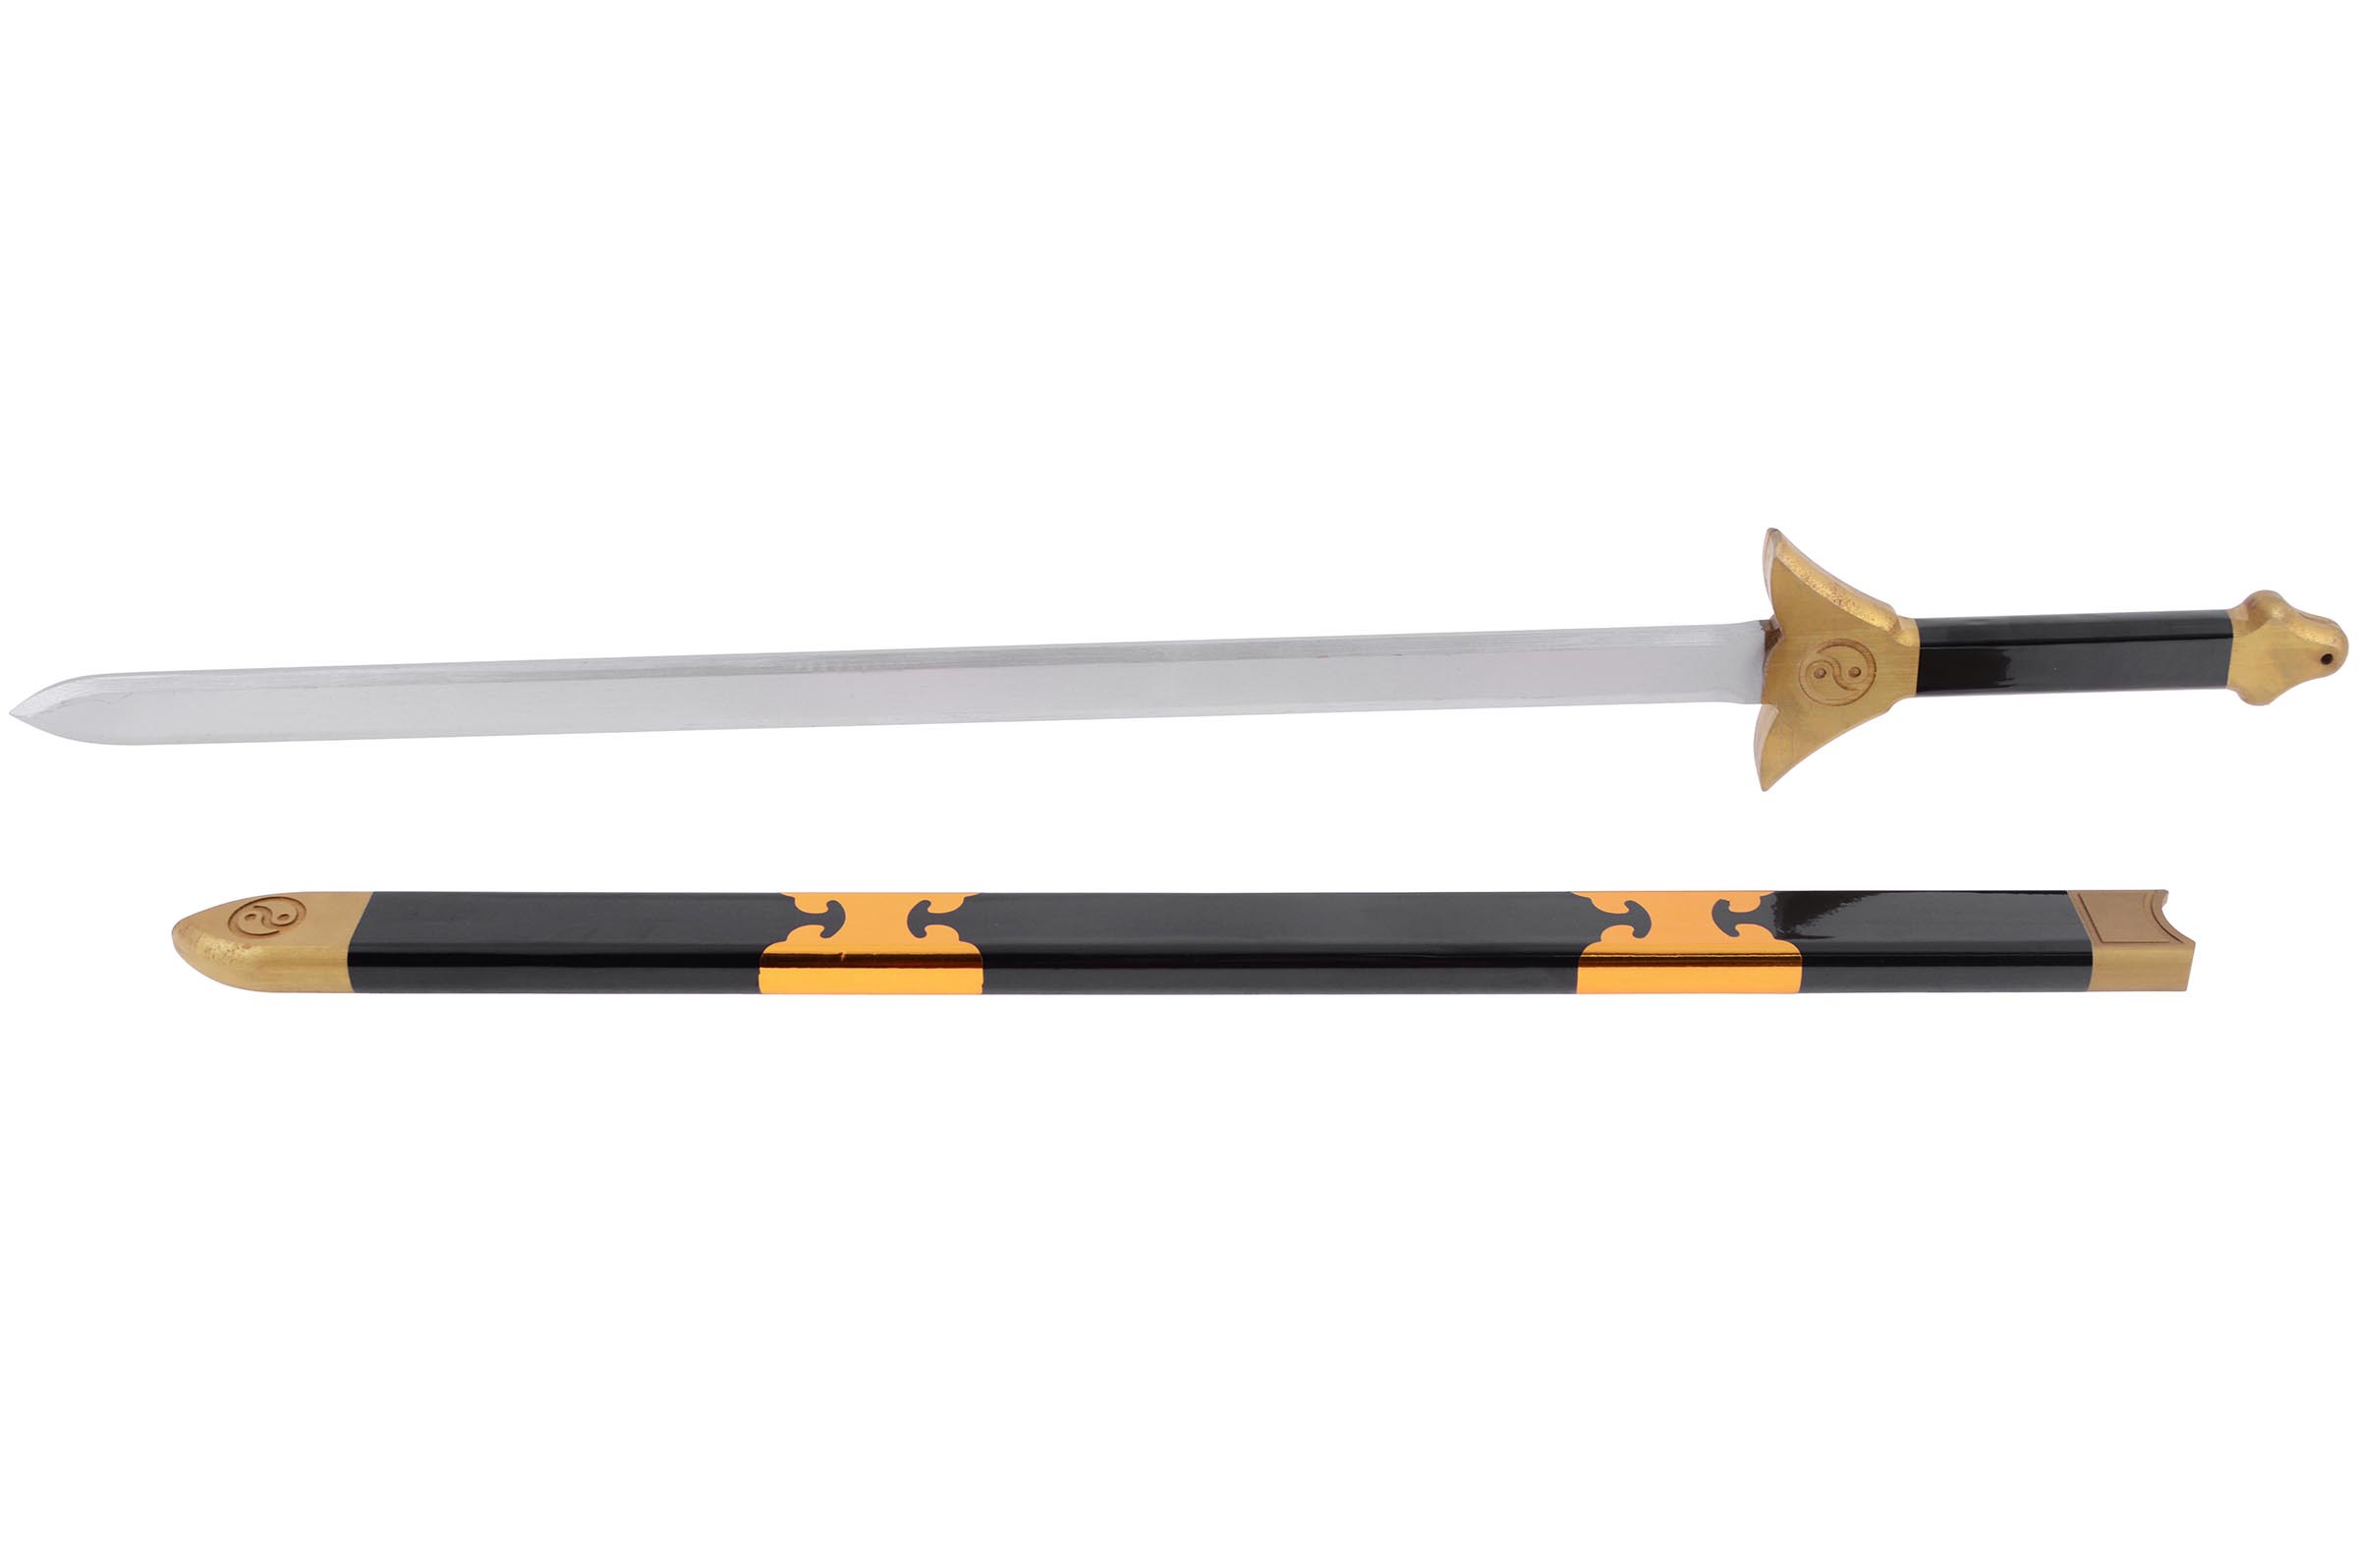 Espada de madera con vaina - monobloque y ligera - DragonSports.eu